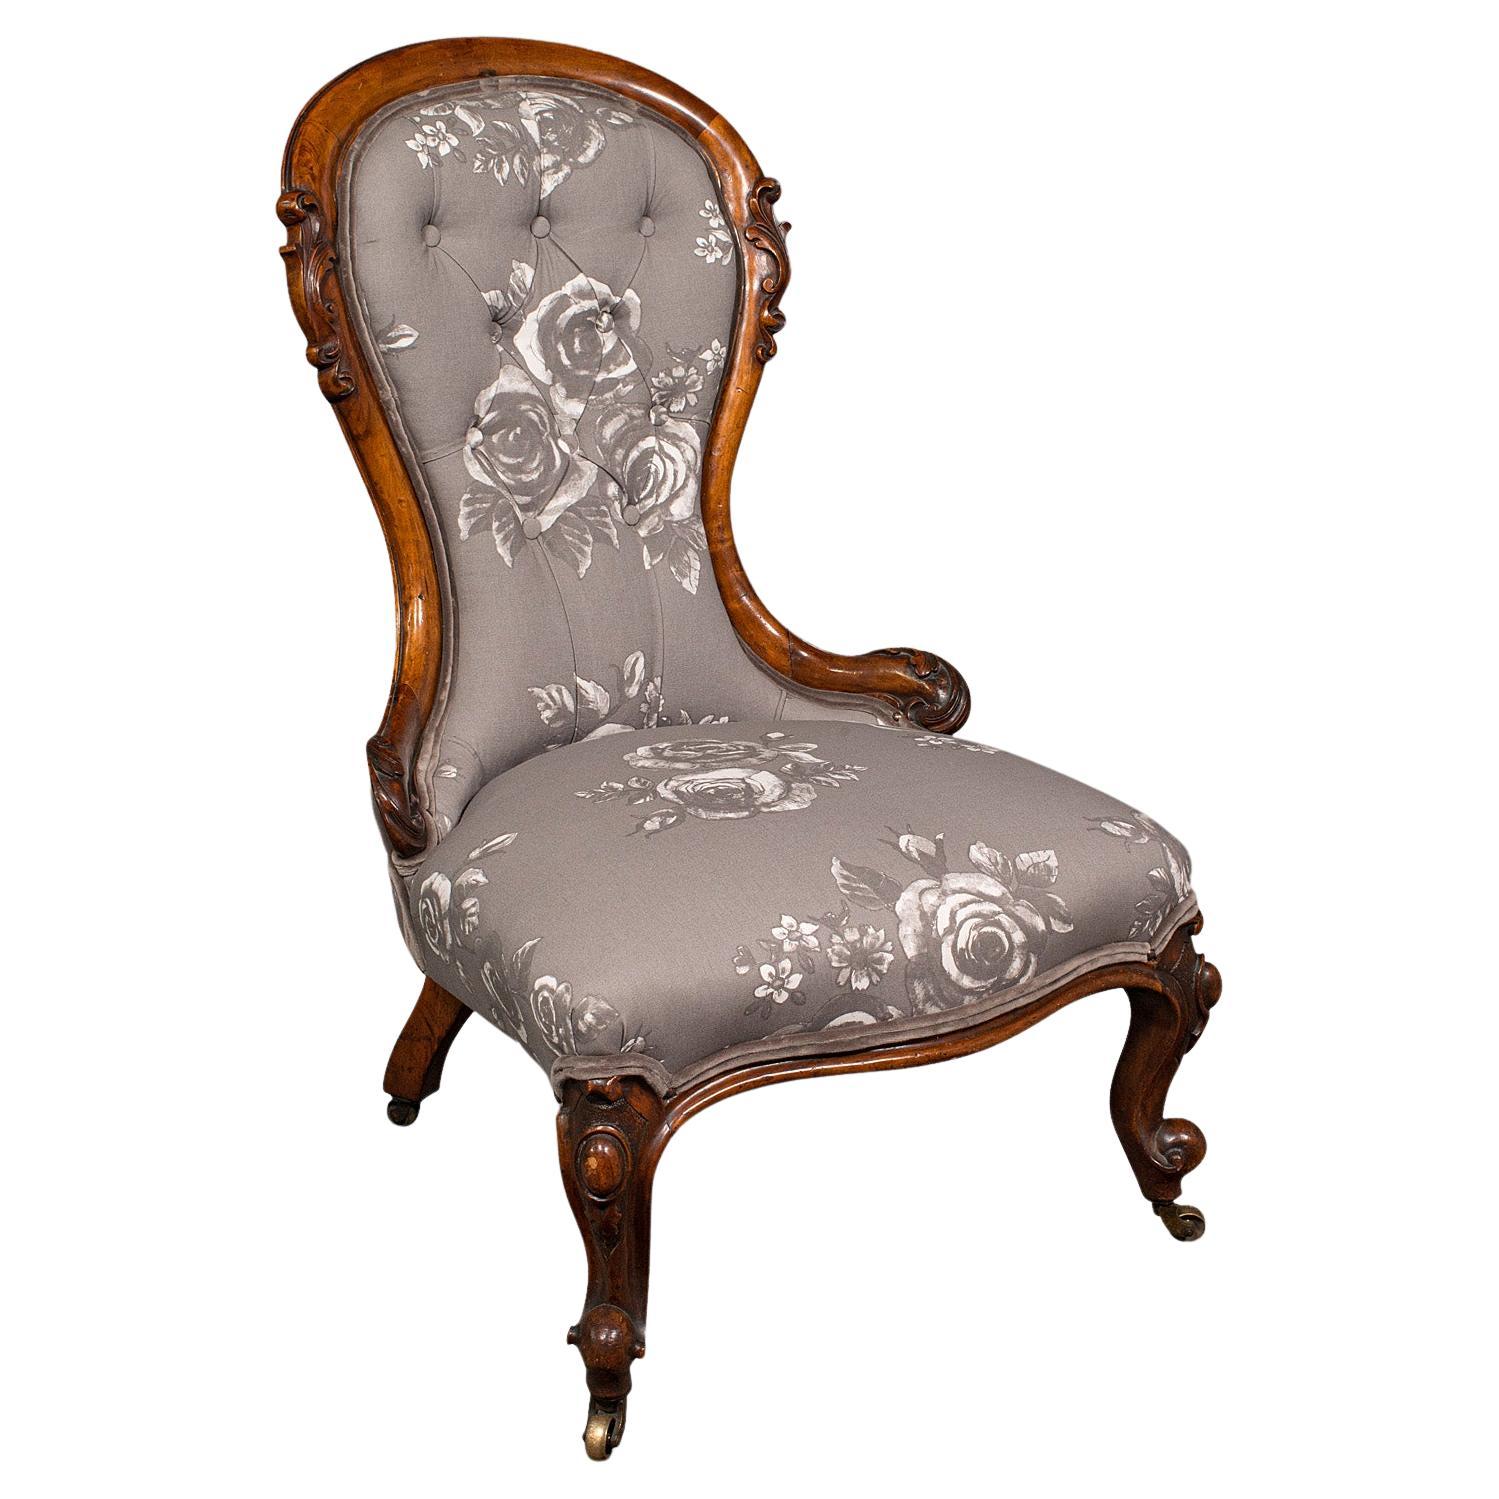 Antique Button Back Salon Chair English Walnut Spoon Seat Victorian circa 1840 For Sale